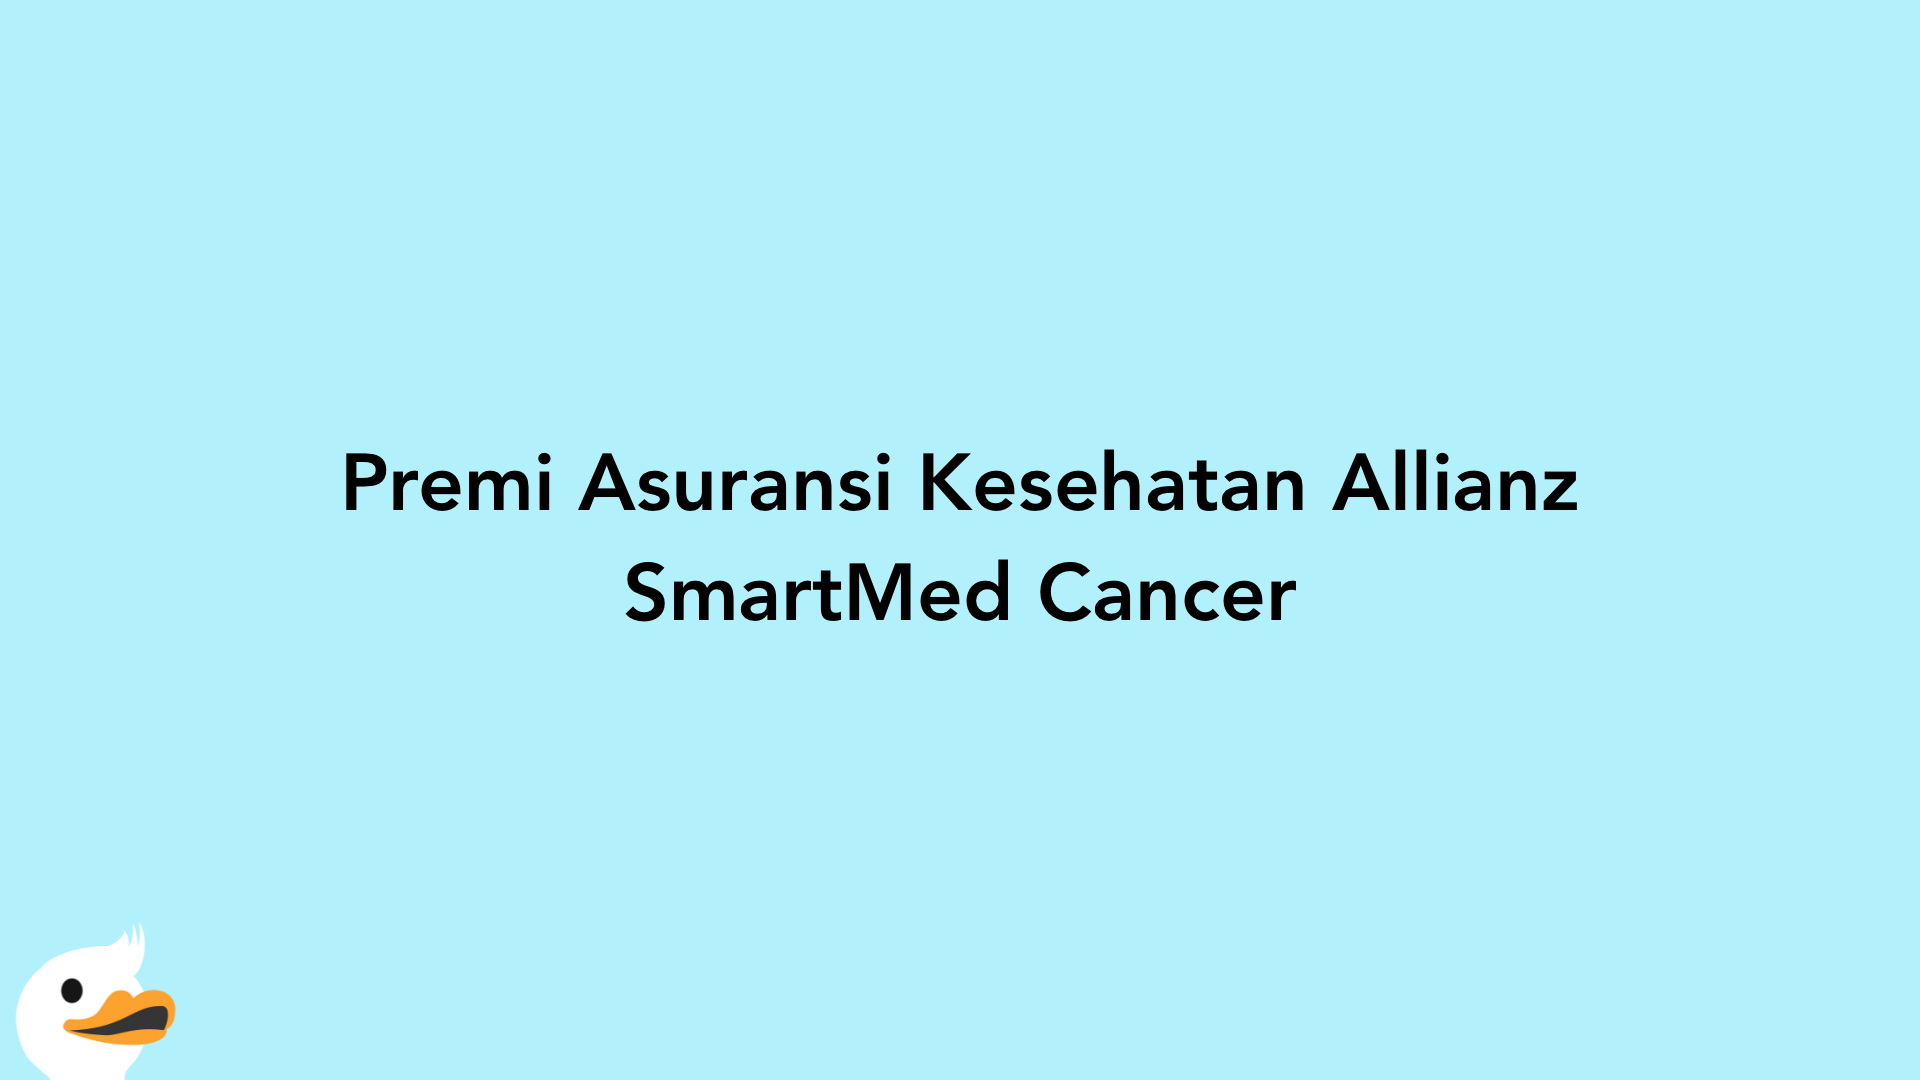 Premi Asuransi Kesehatan Allianz SmartMed Cancer